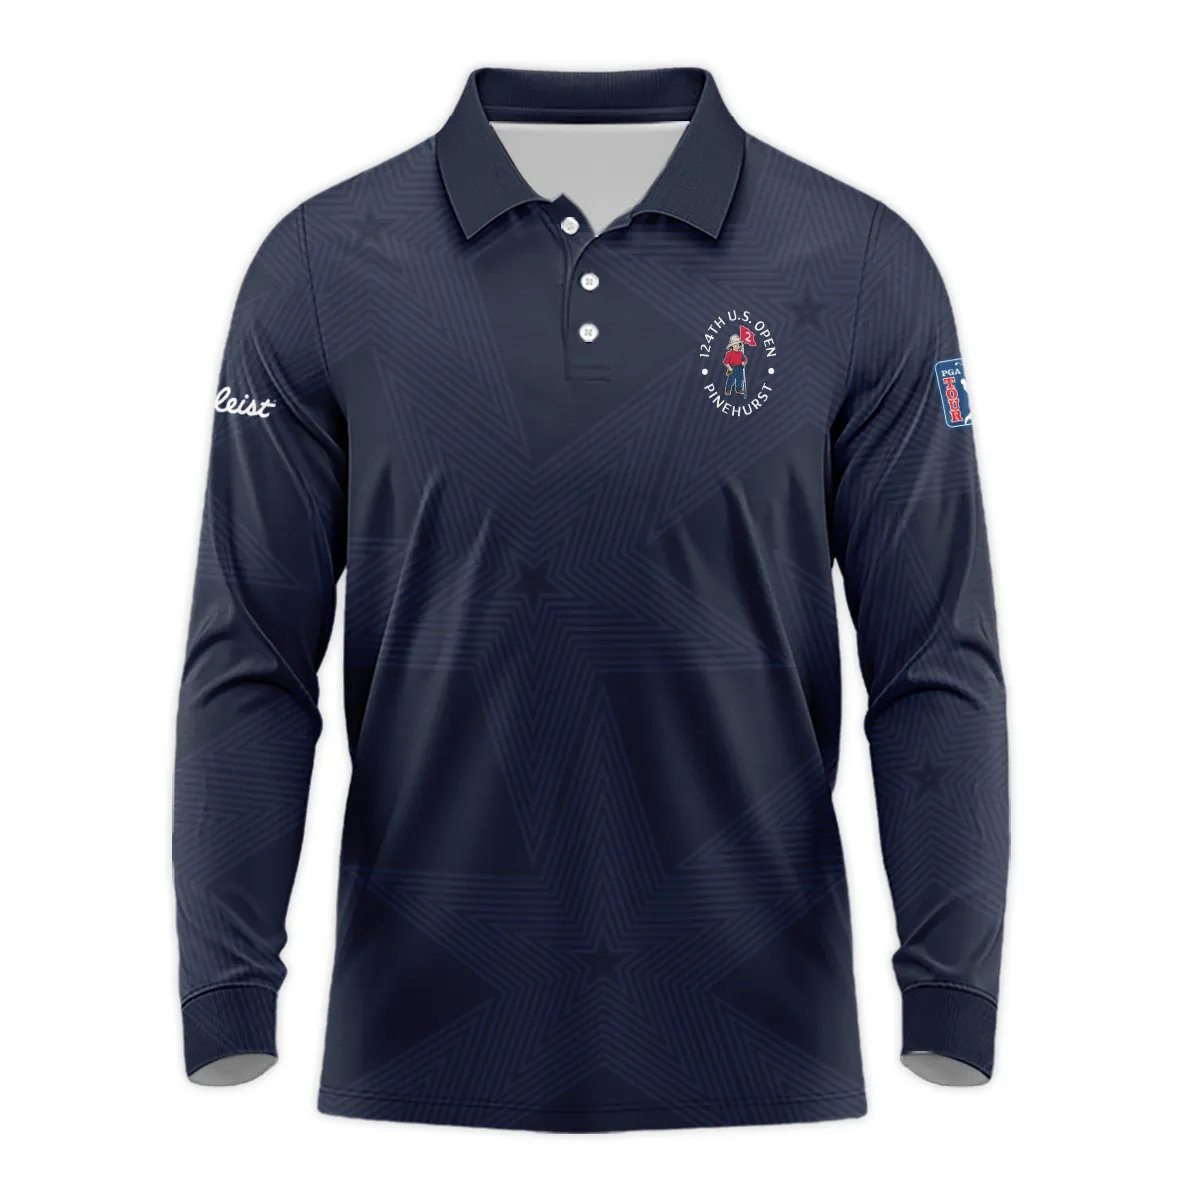 Golf Navy Color Star Pattern 124th U.S. Open Pinehurst Titlest Quarter-Zip Polo Shirt